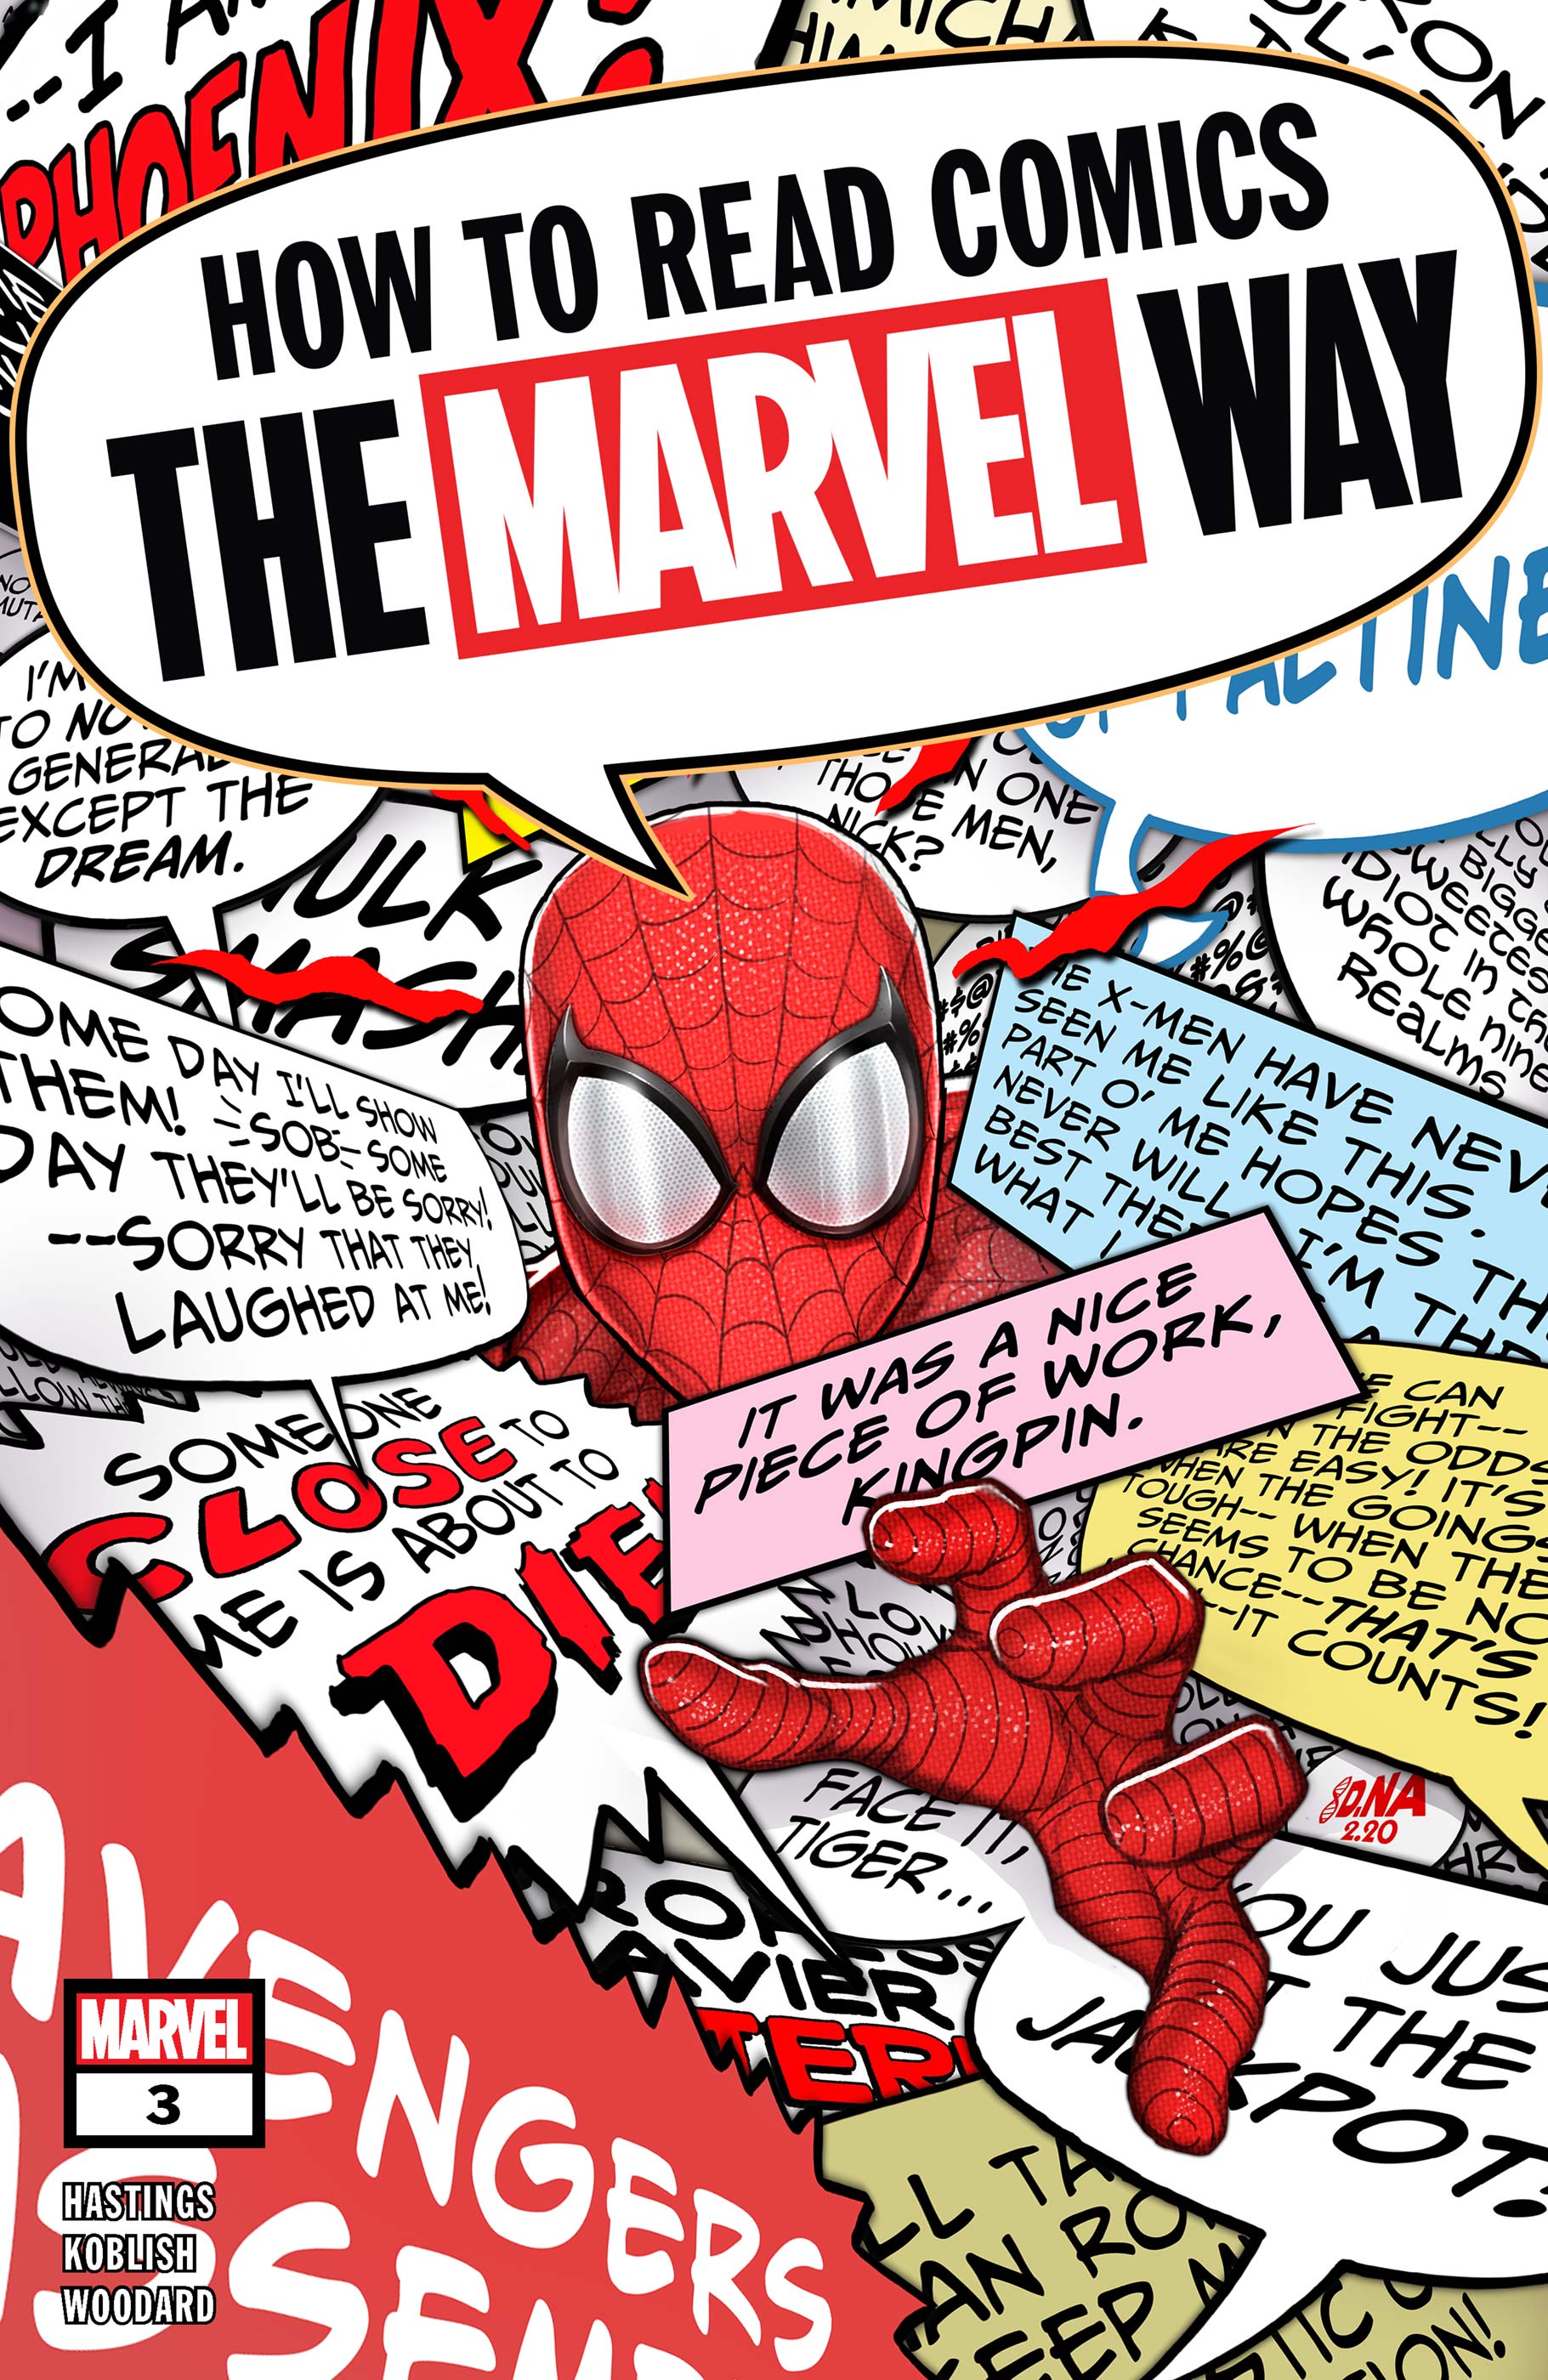 How to read marvel comics